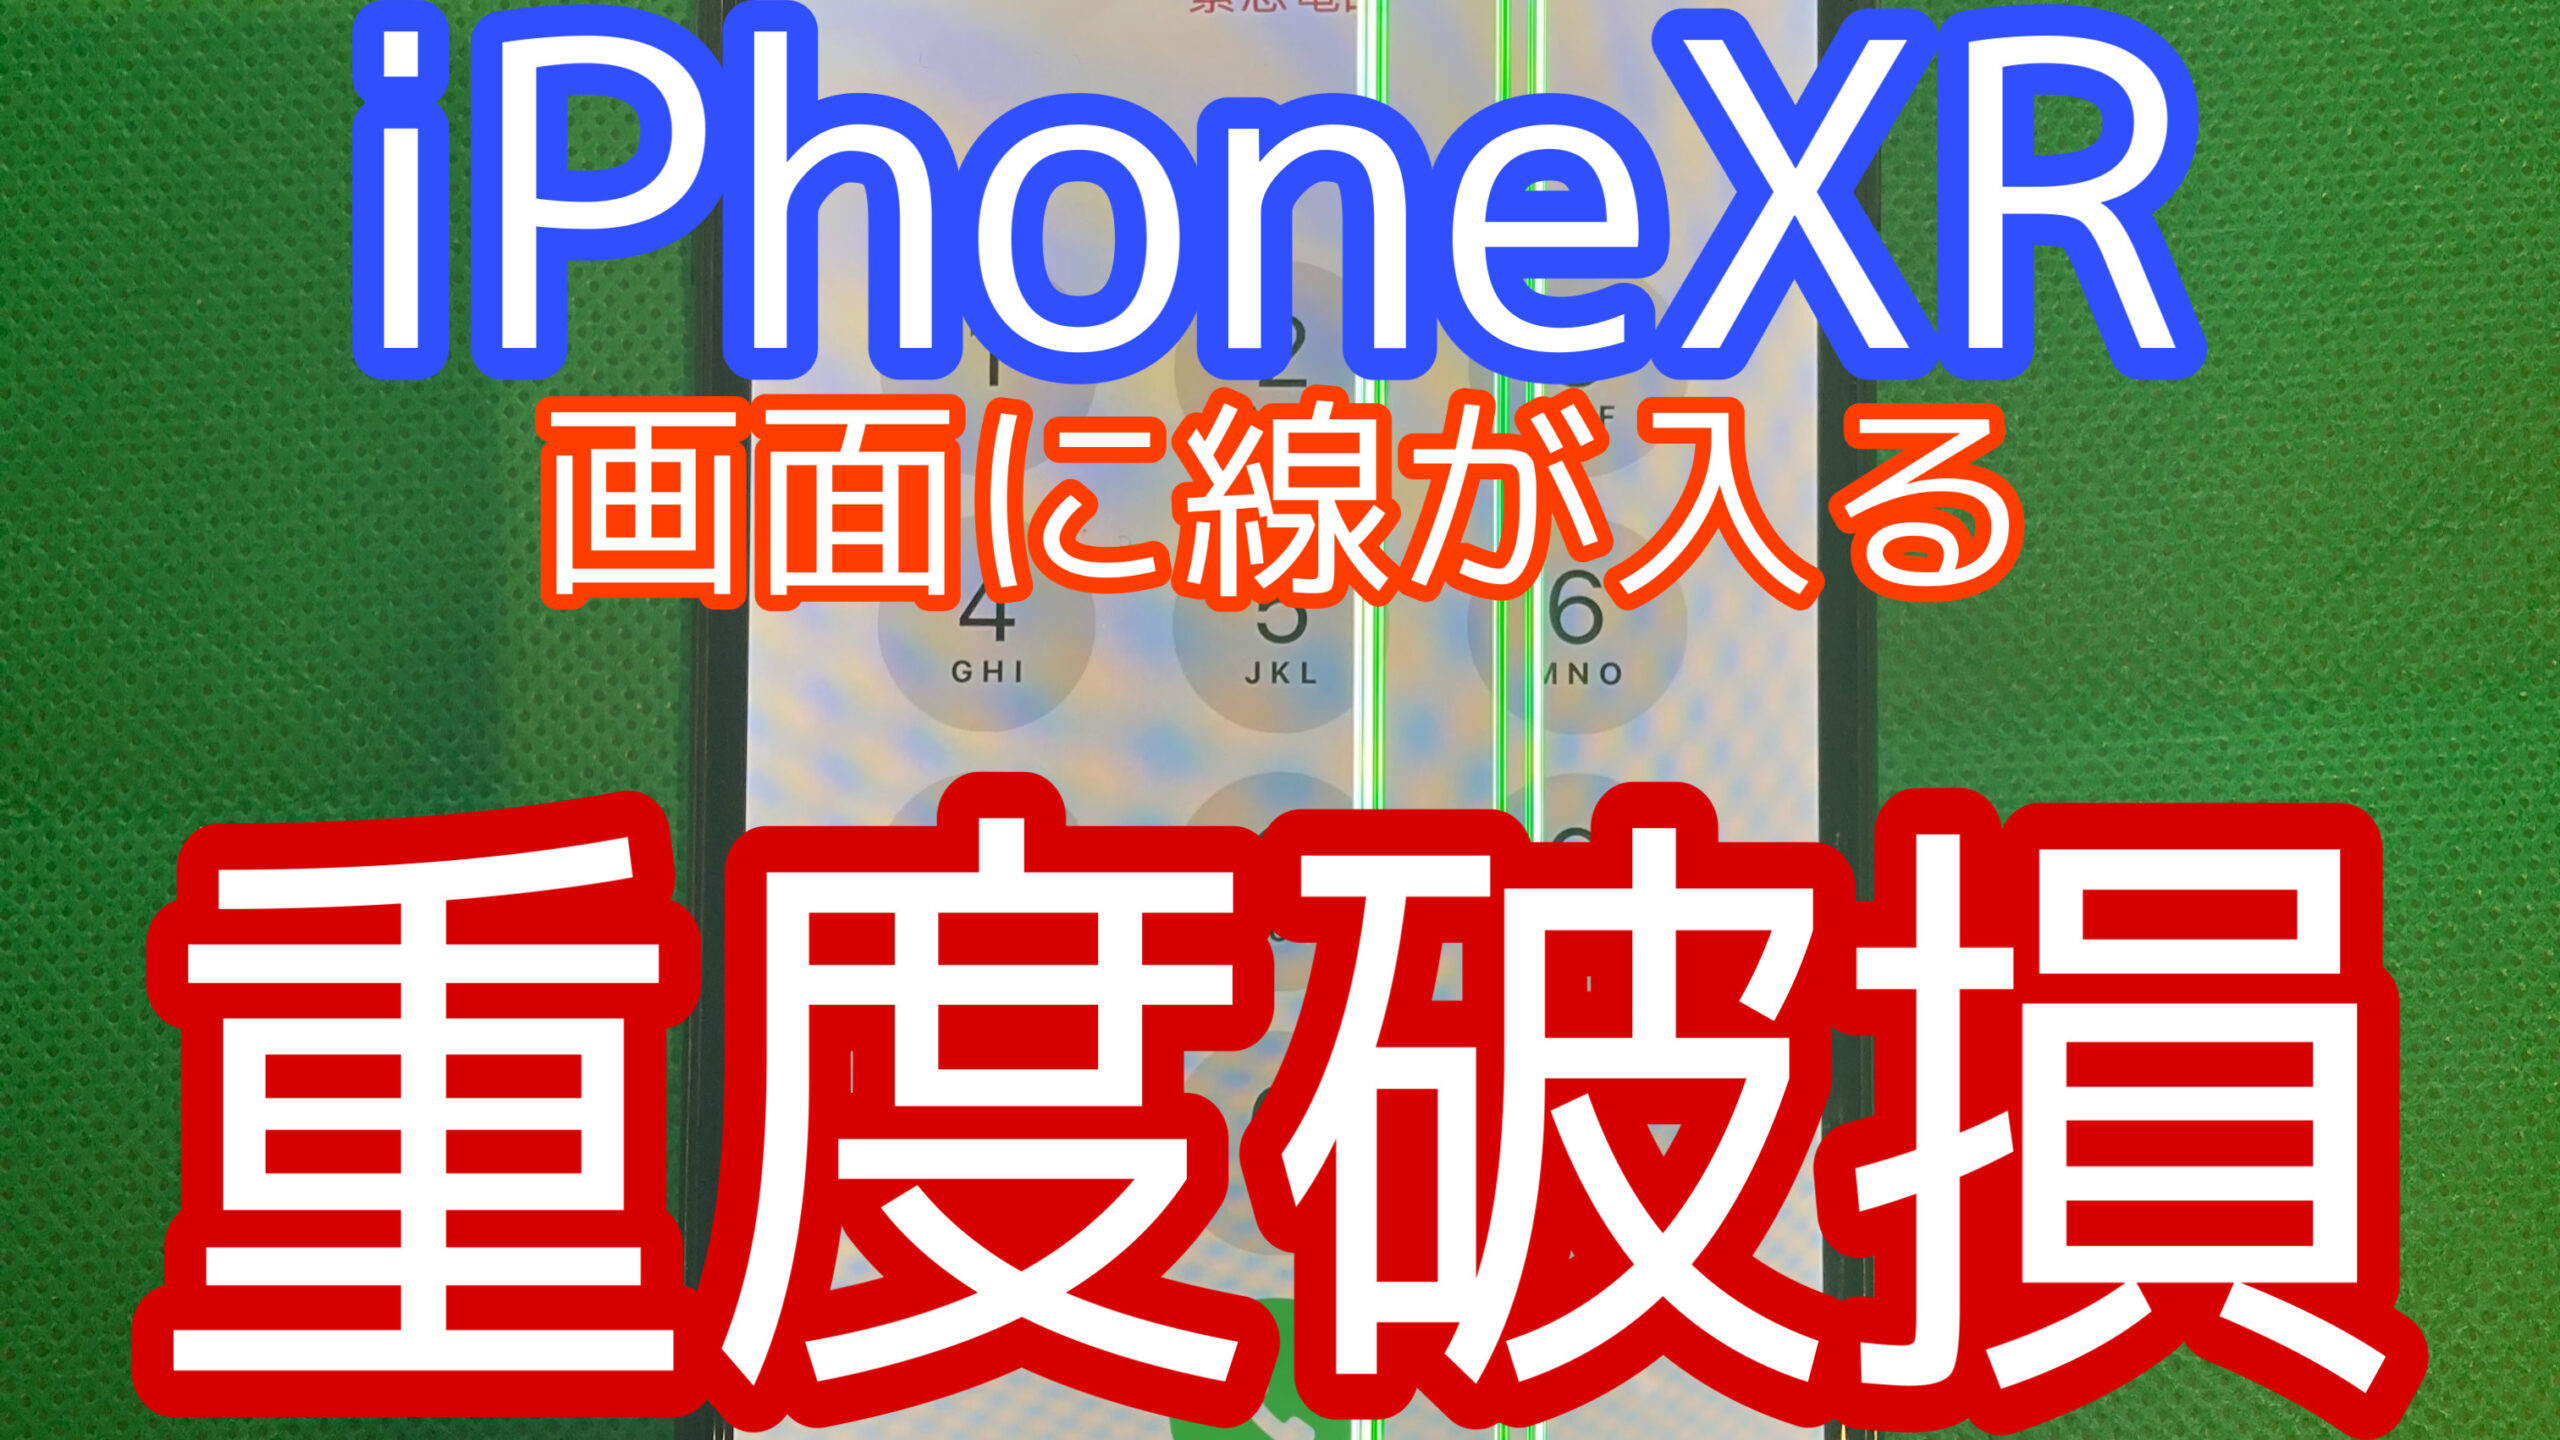 iPhoneXRアイキャッチ画像